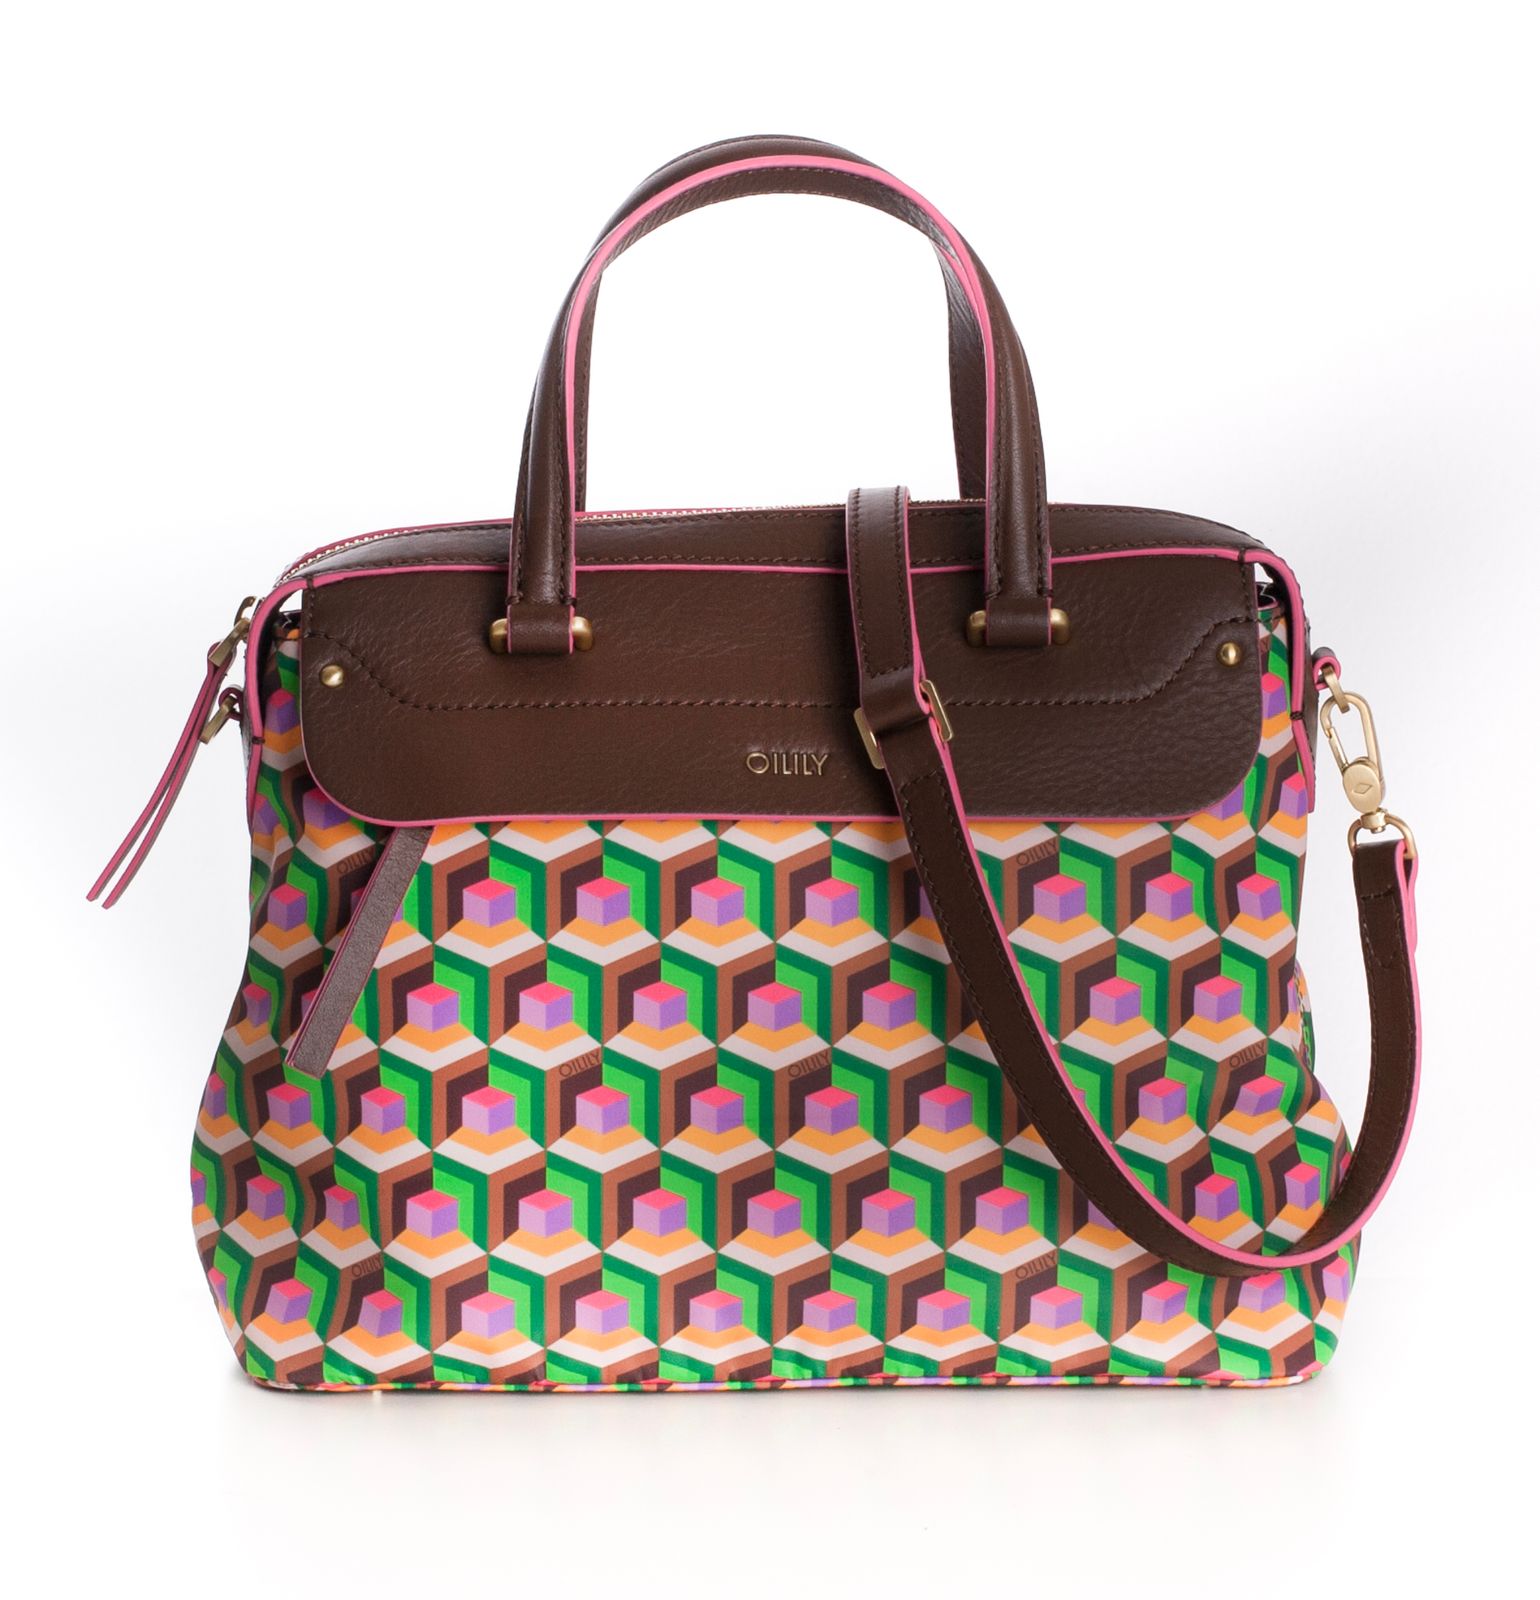 Oilily handbag Handbag S Jolly Green | Buy bags, purses & accessories ...